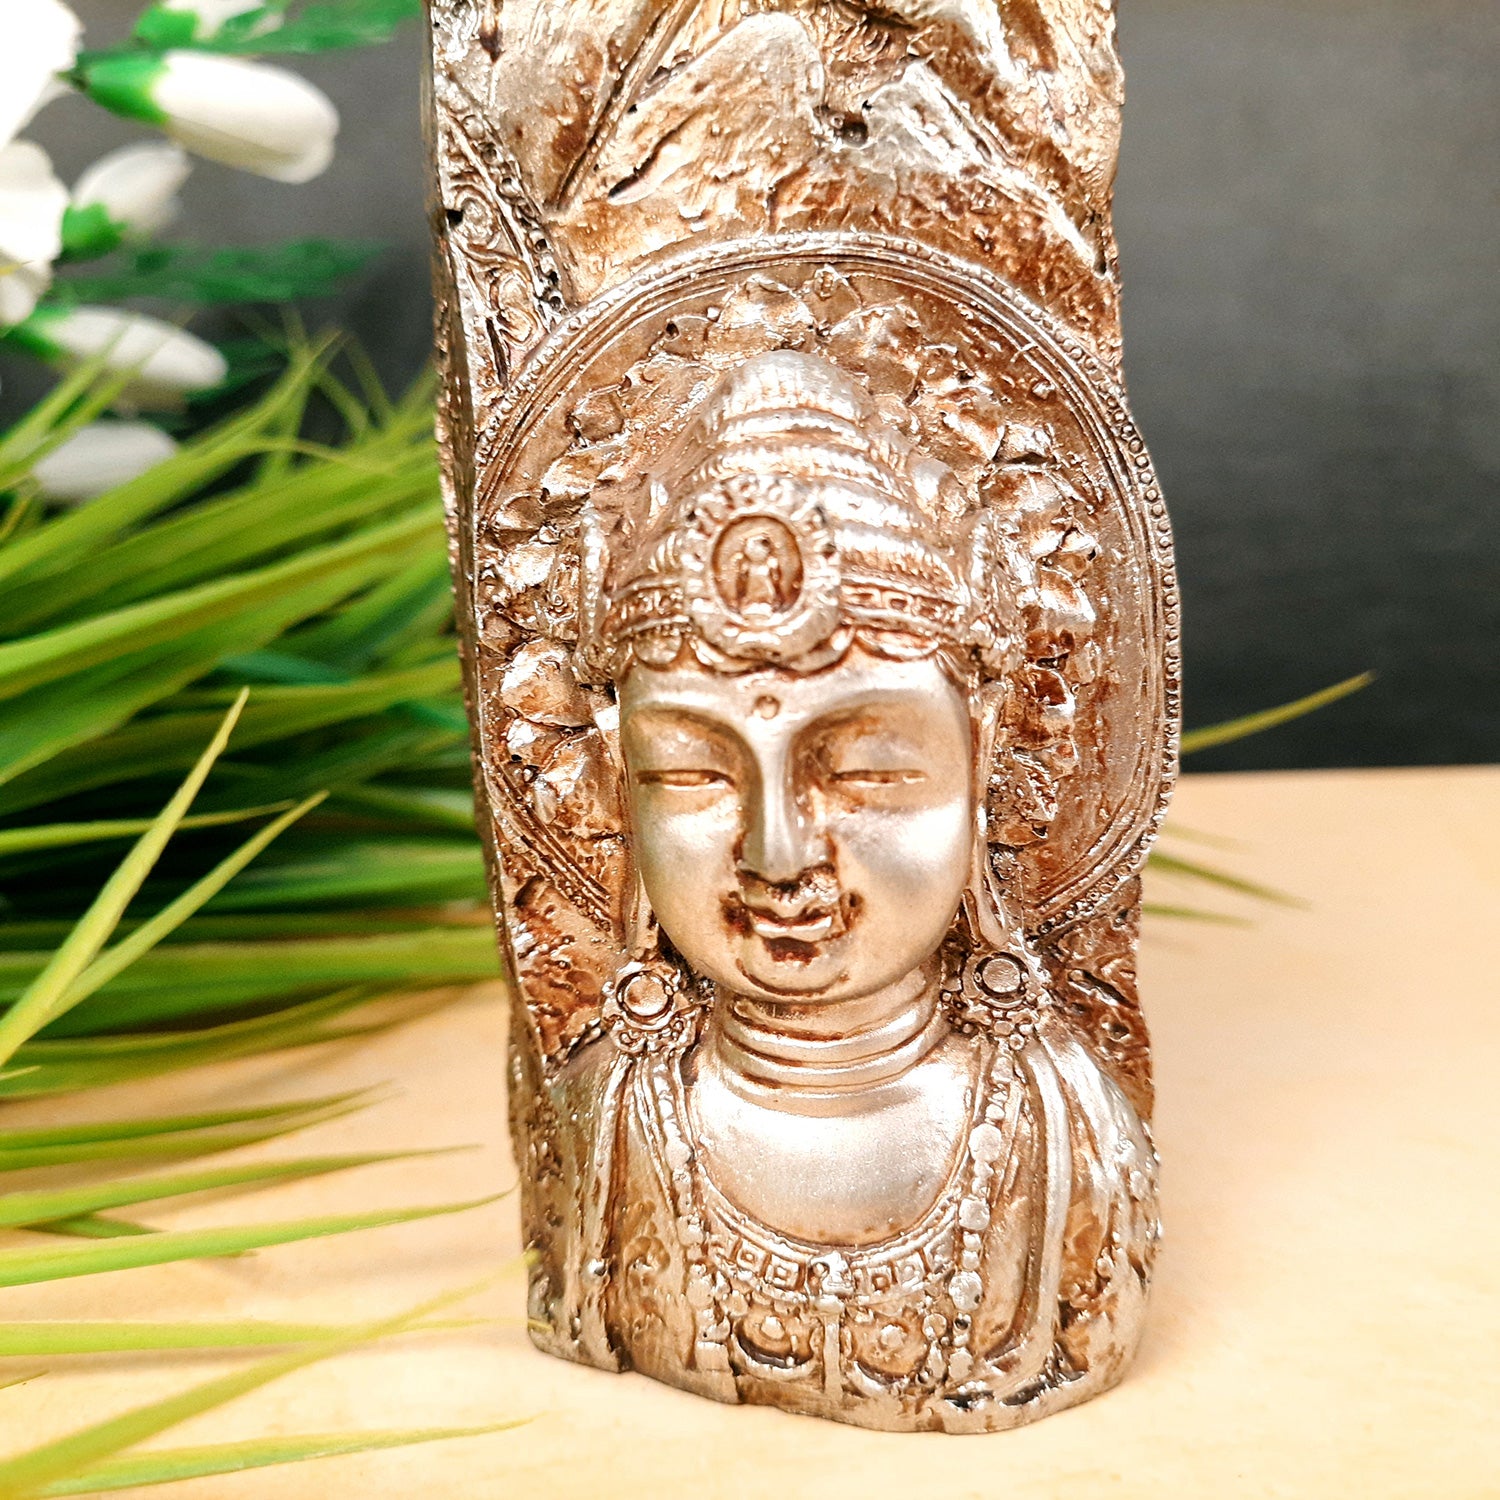 Tea Light Holder - Buddha Design | T Light Candle Stand - For For Home Decor, Living room, Table & Shelf Decor, Office, Decorative Item for Festivals & Gifts - 6 Inch - Apkamart